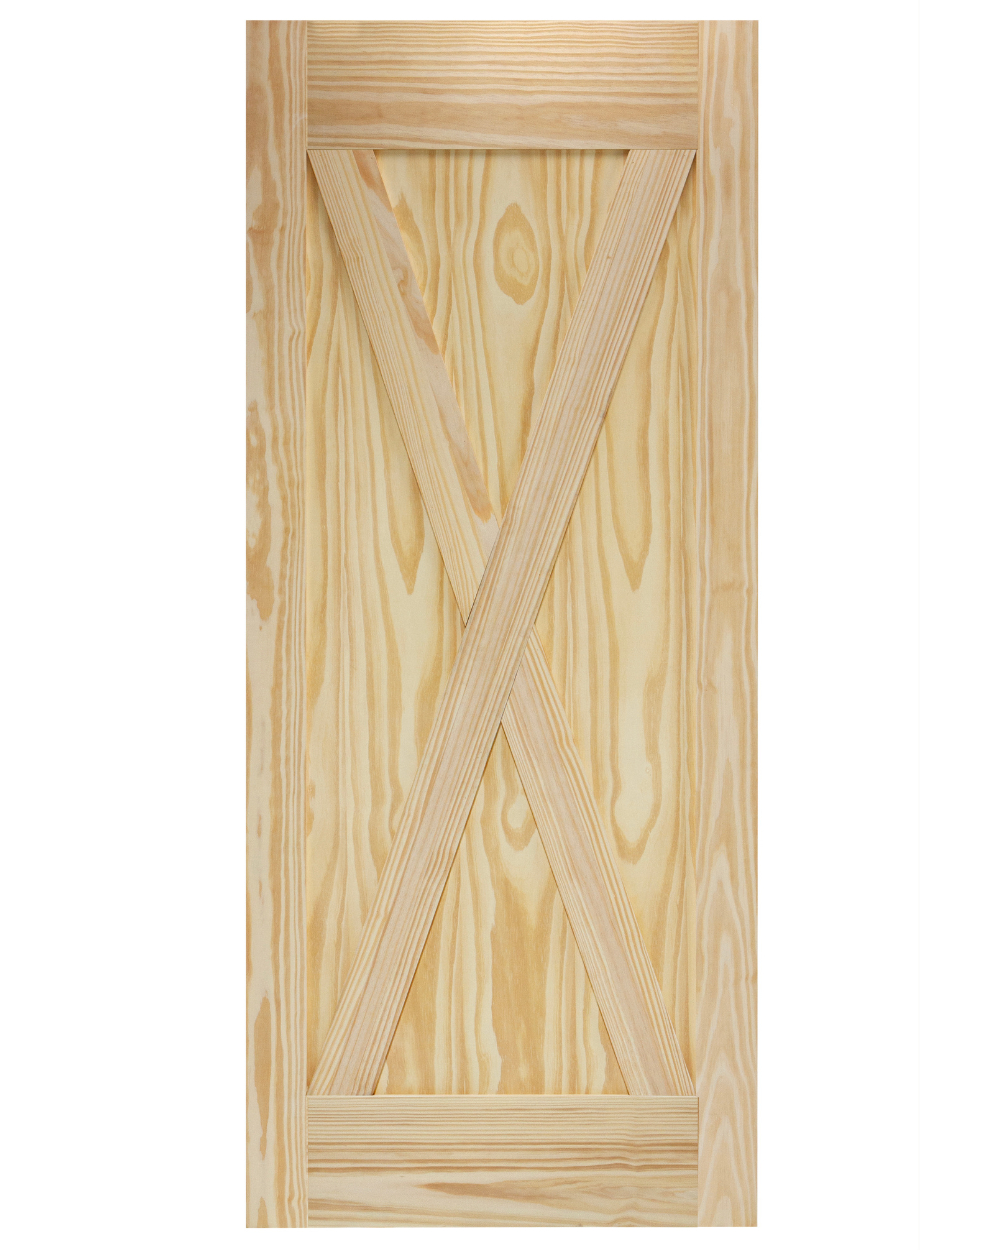 x-Brace Wood Barn Door Fully Assembled